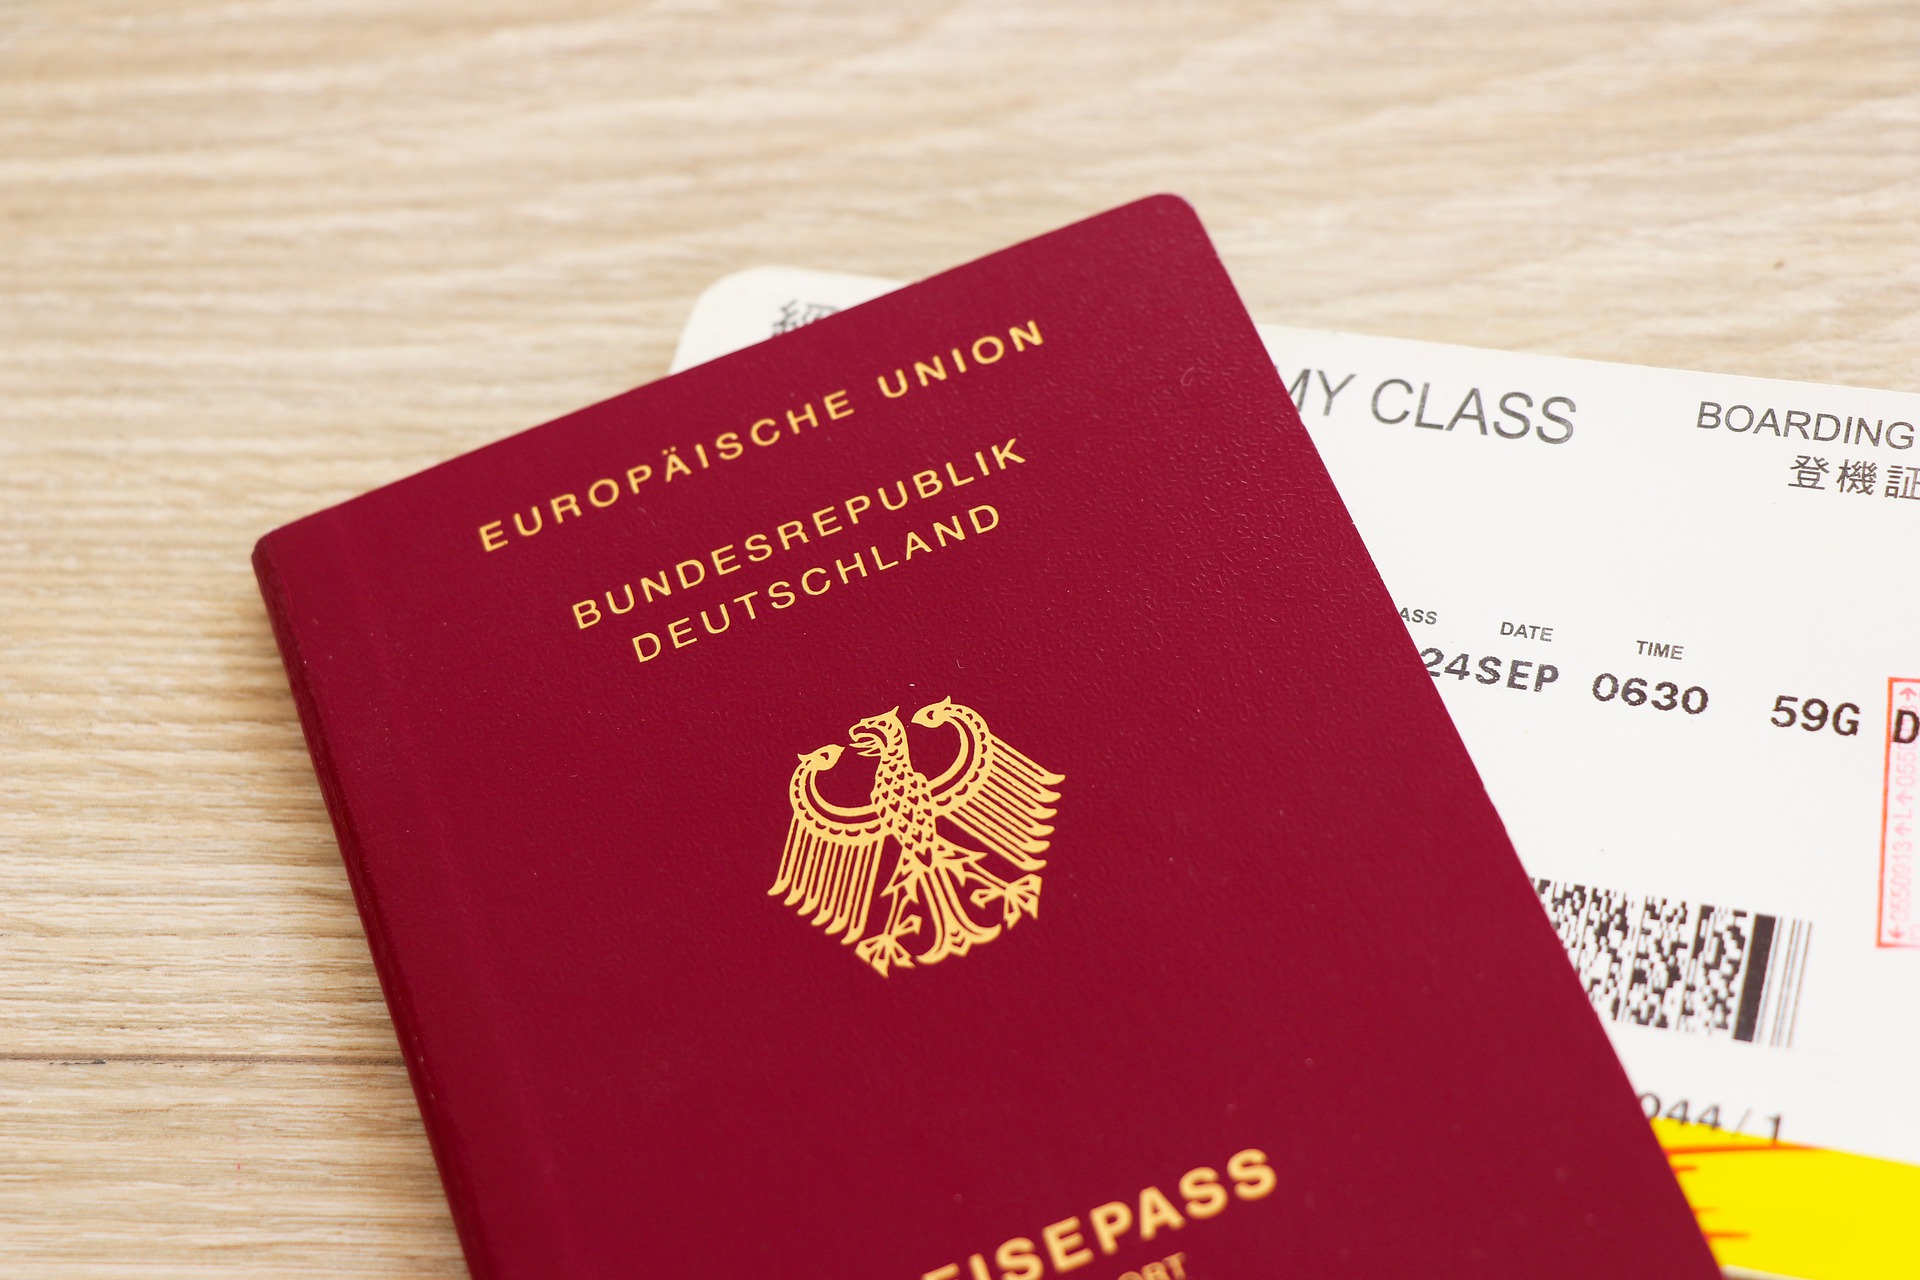 German passport (red) and boarding pass